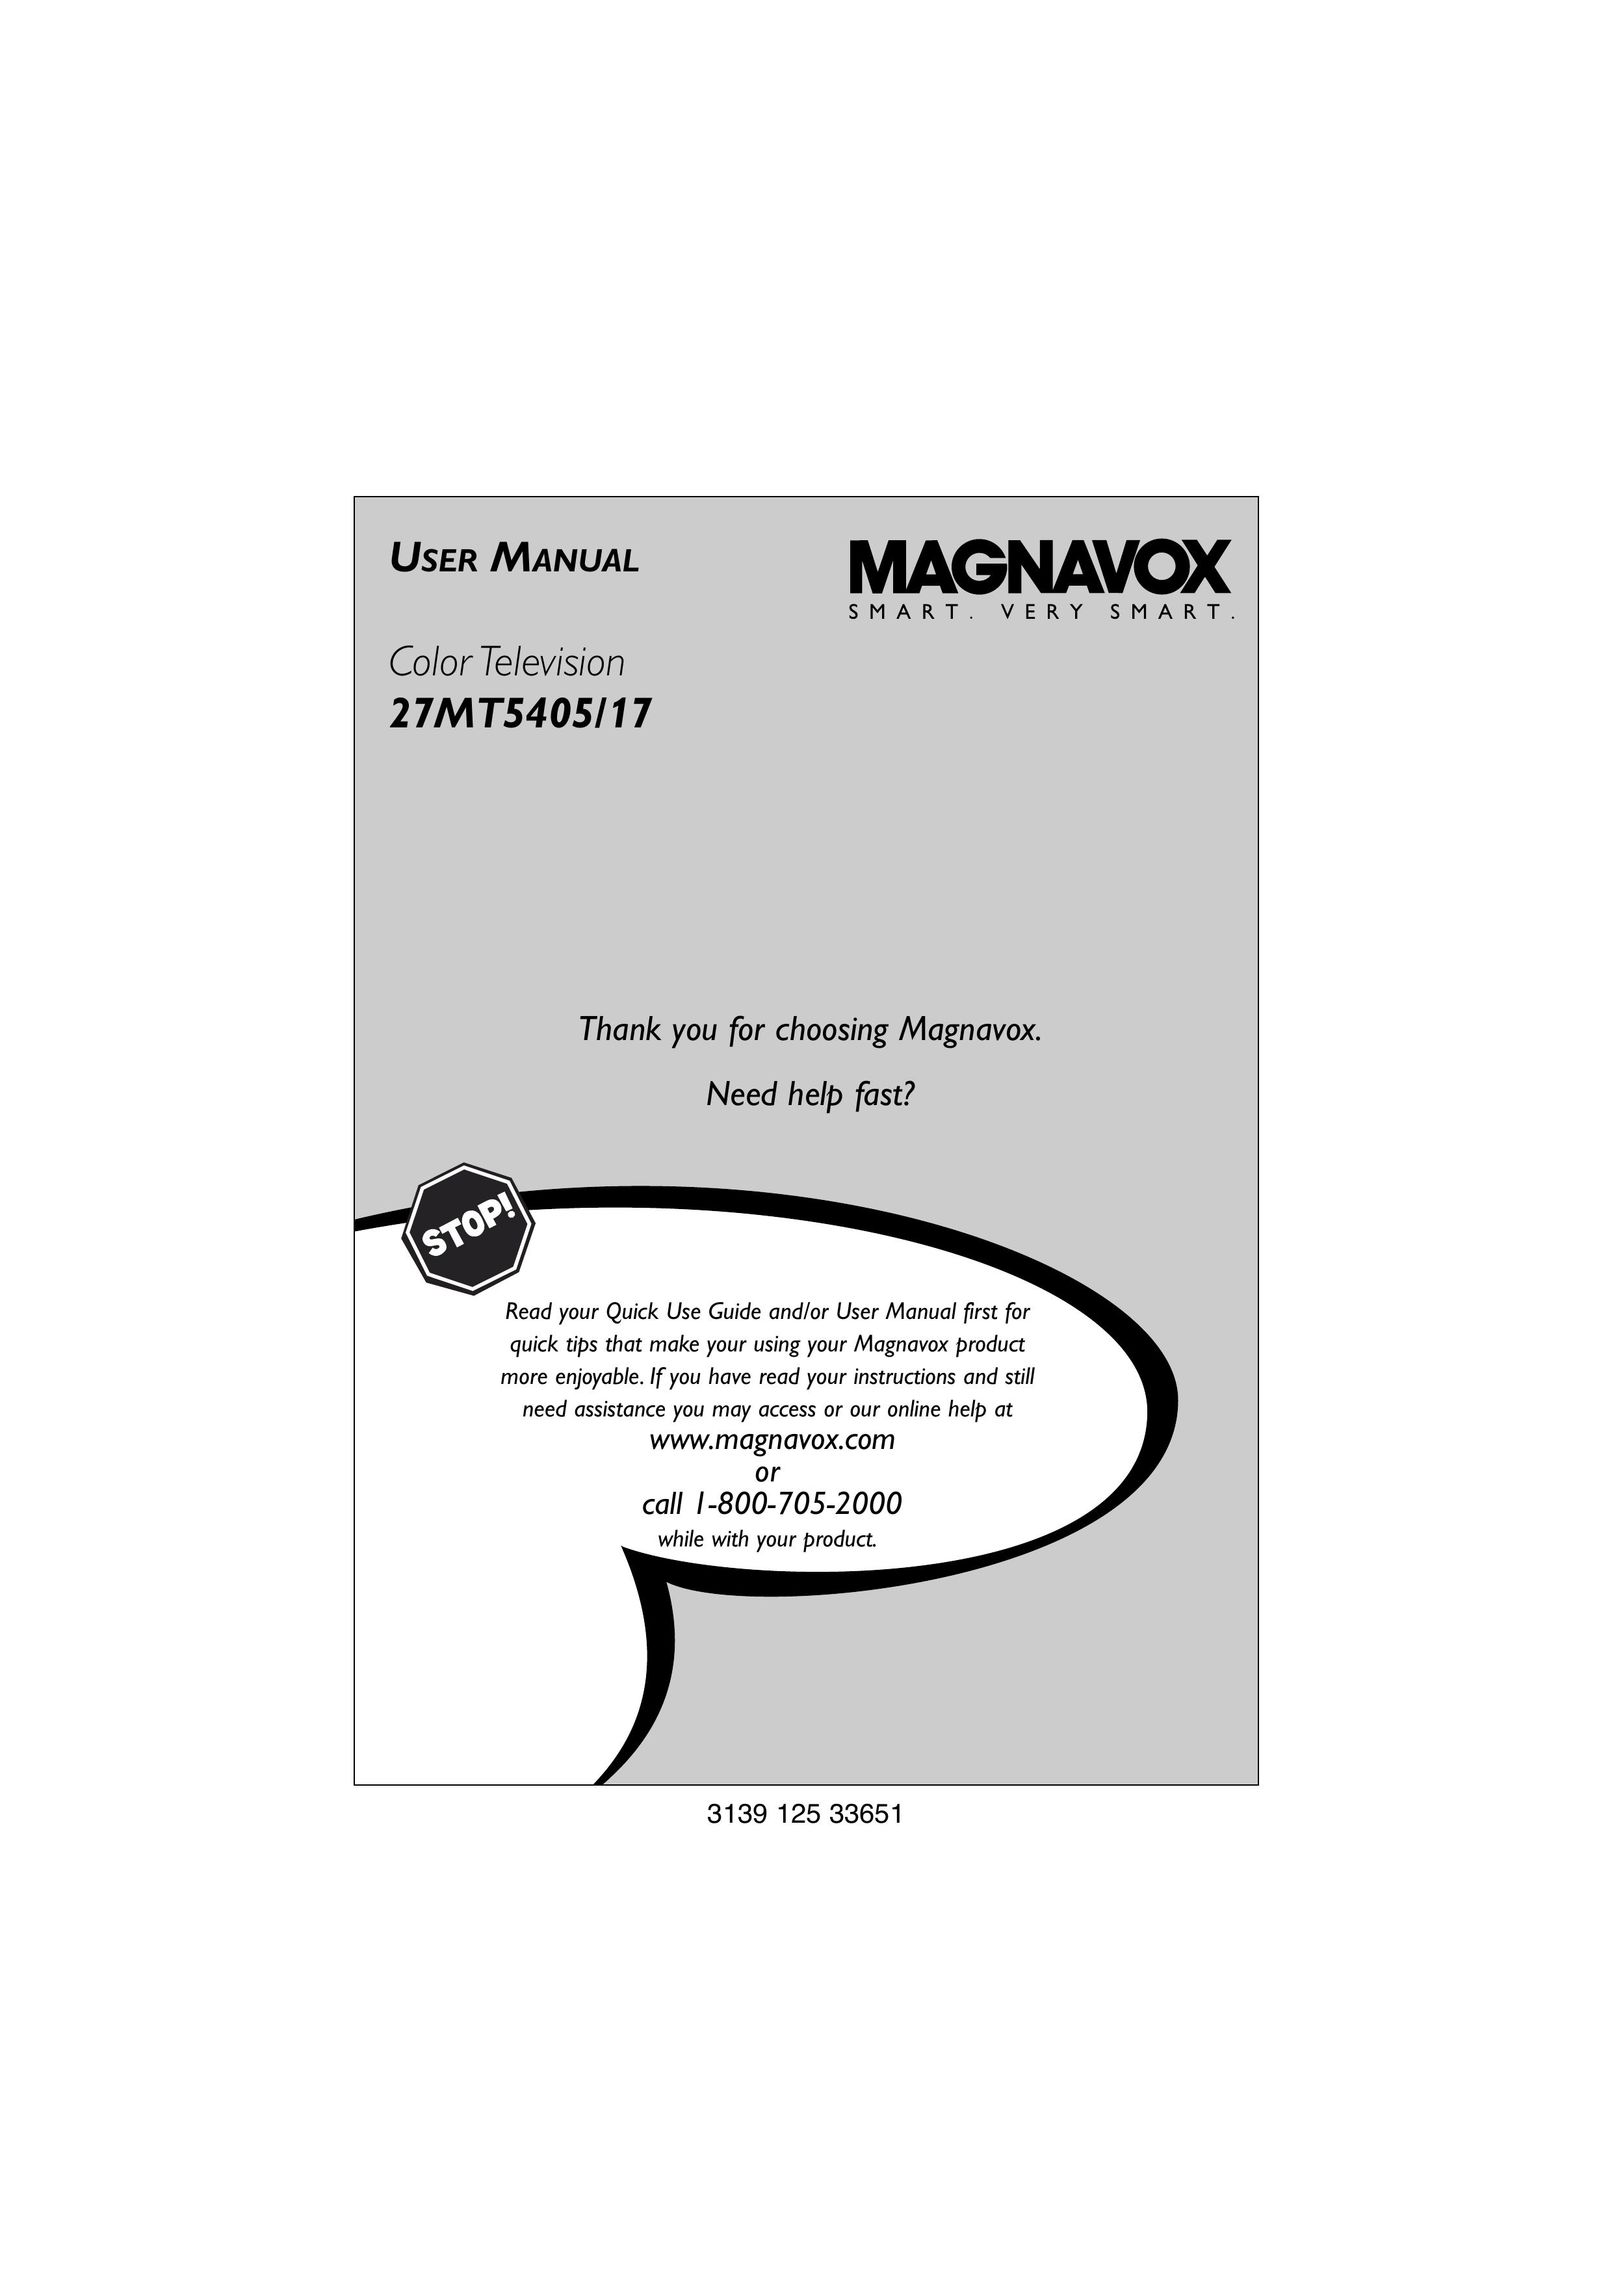 Magnavox 27MT5405/17 CRT Television User Manual